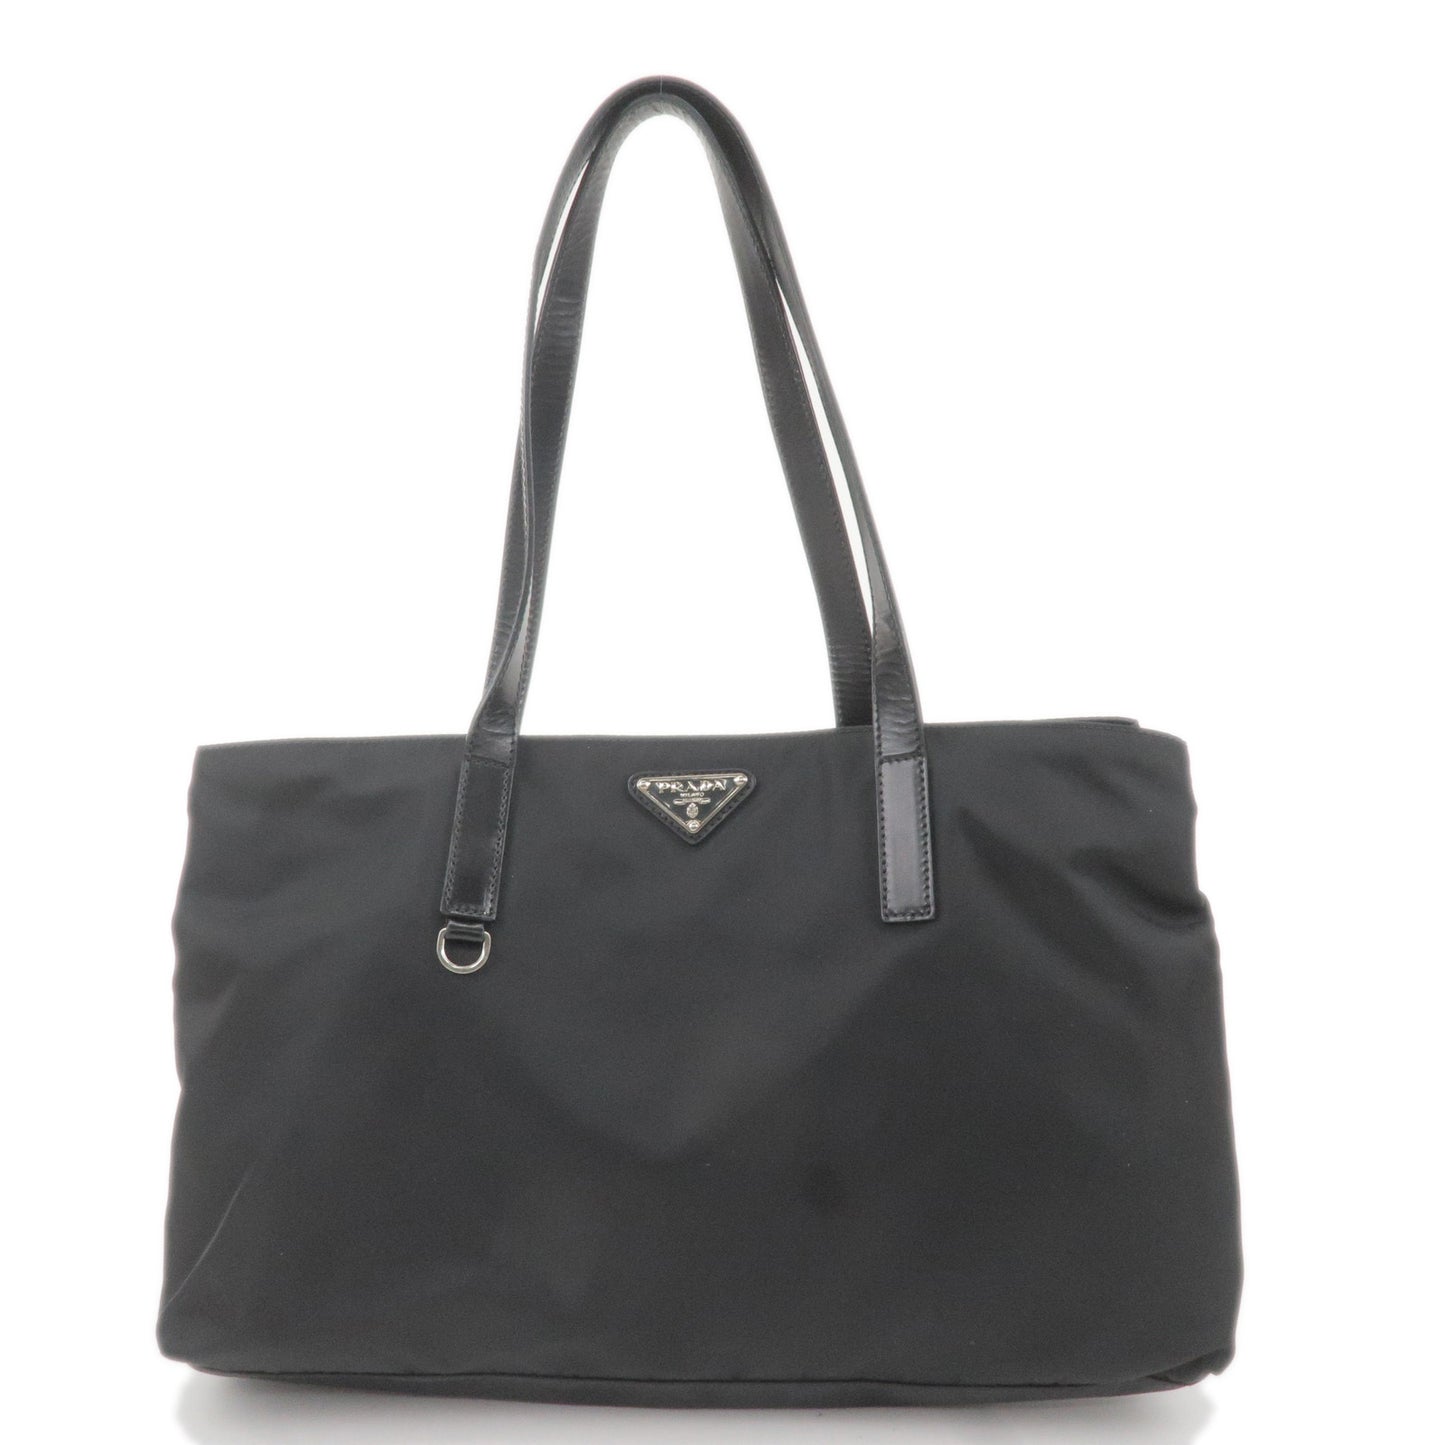 PRADA-Logo-Nylon-Leather-Tote-Bag-Hand-Bag-Black